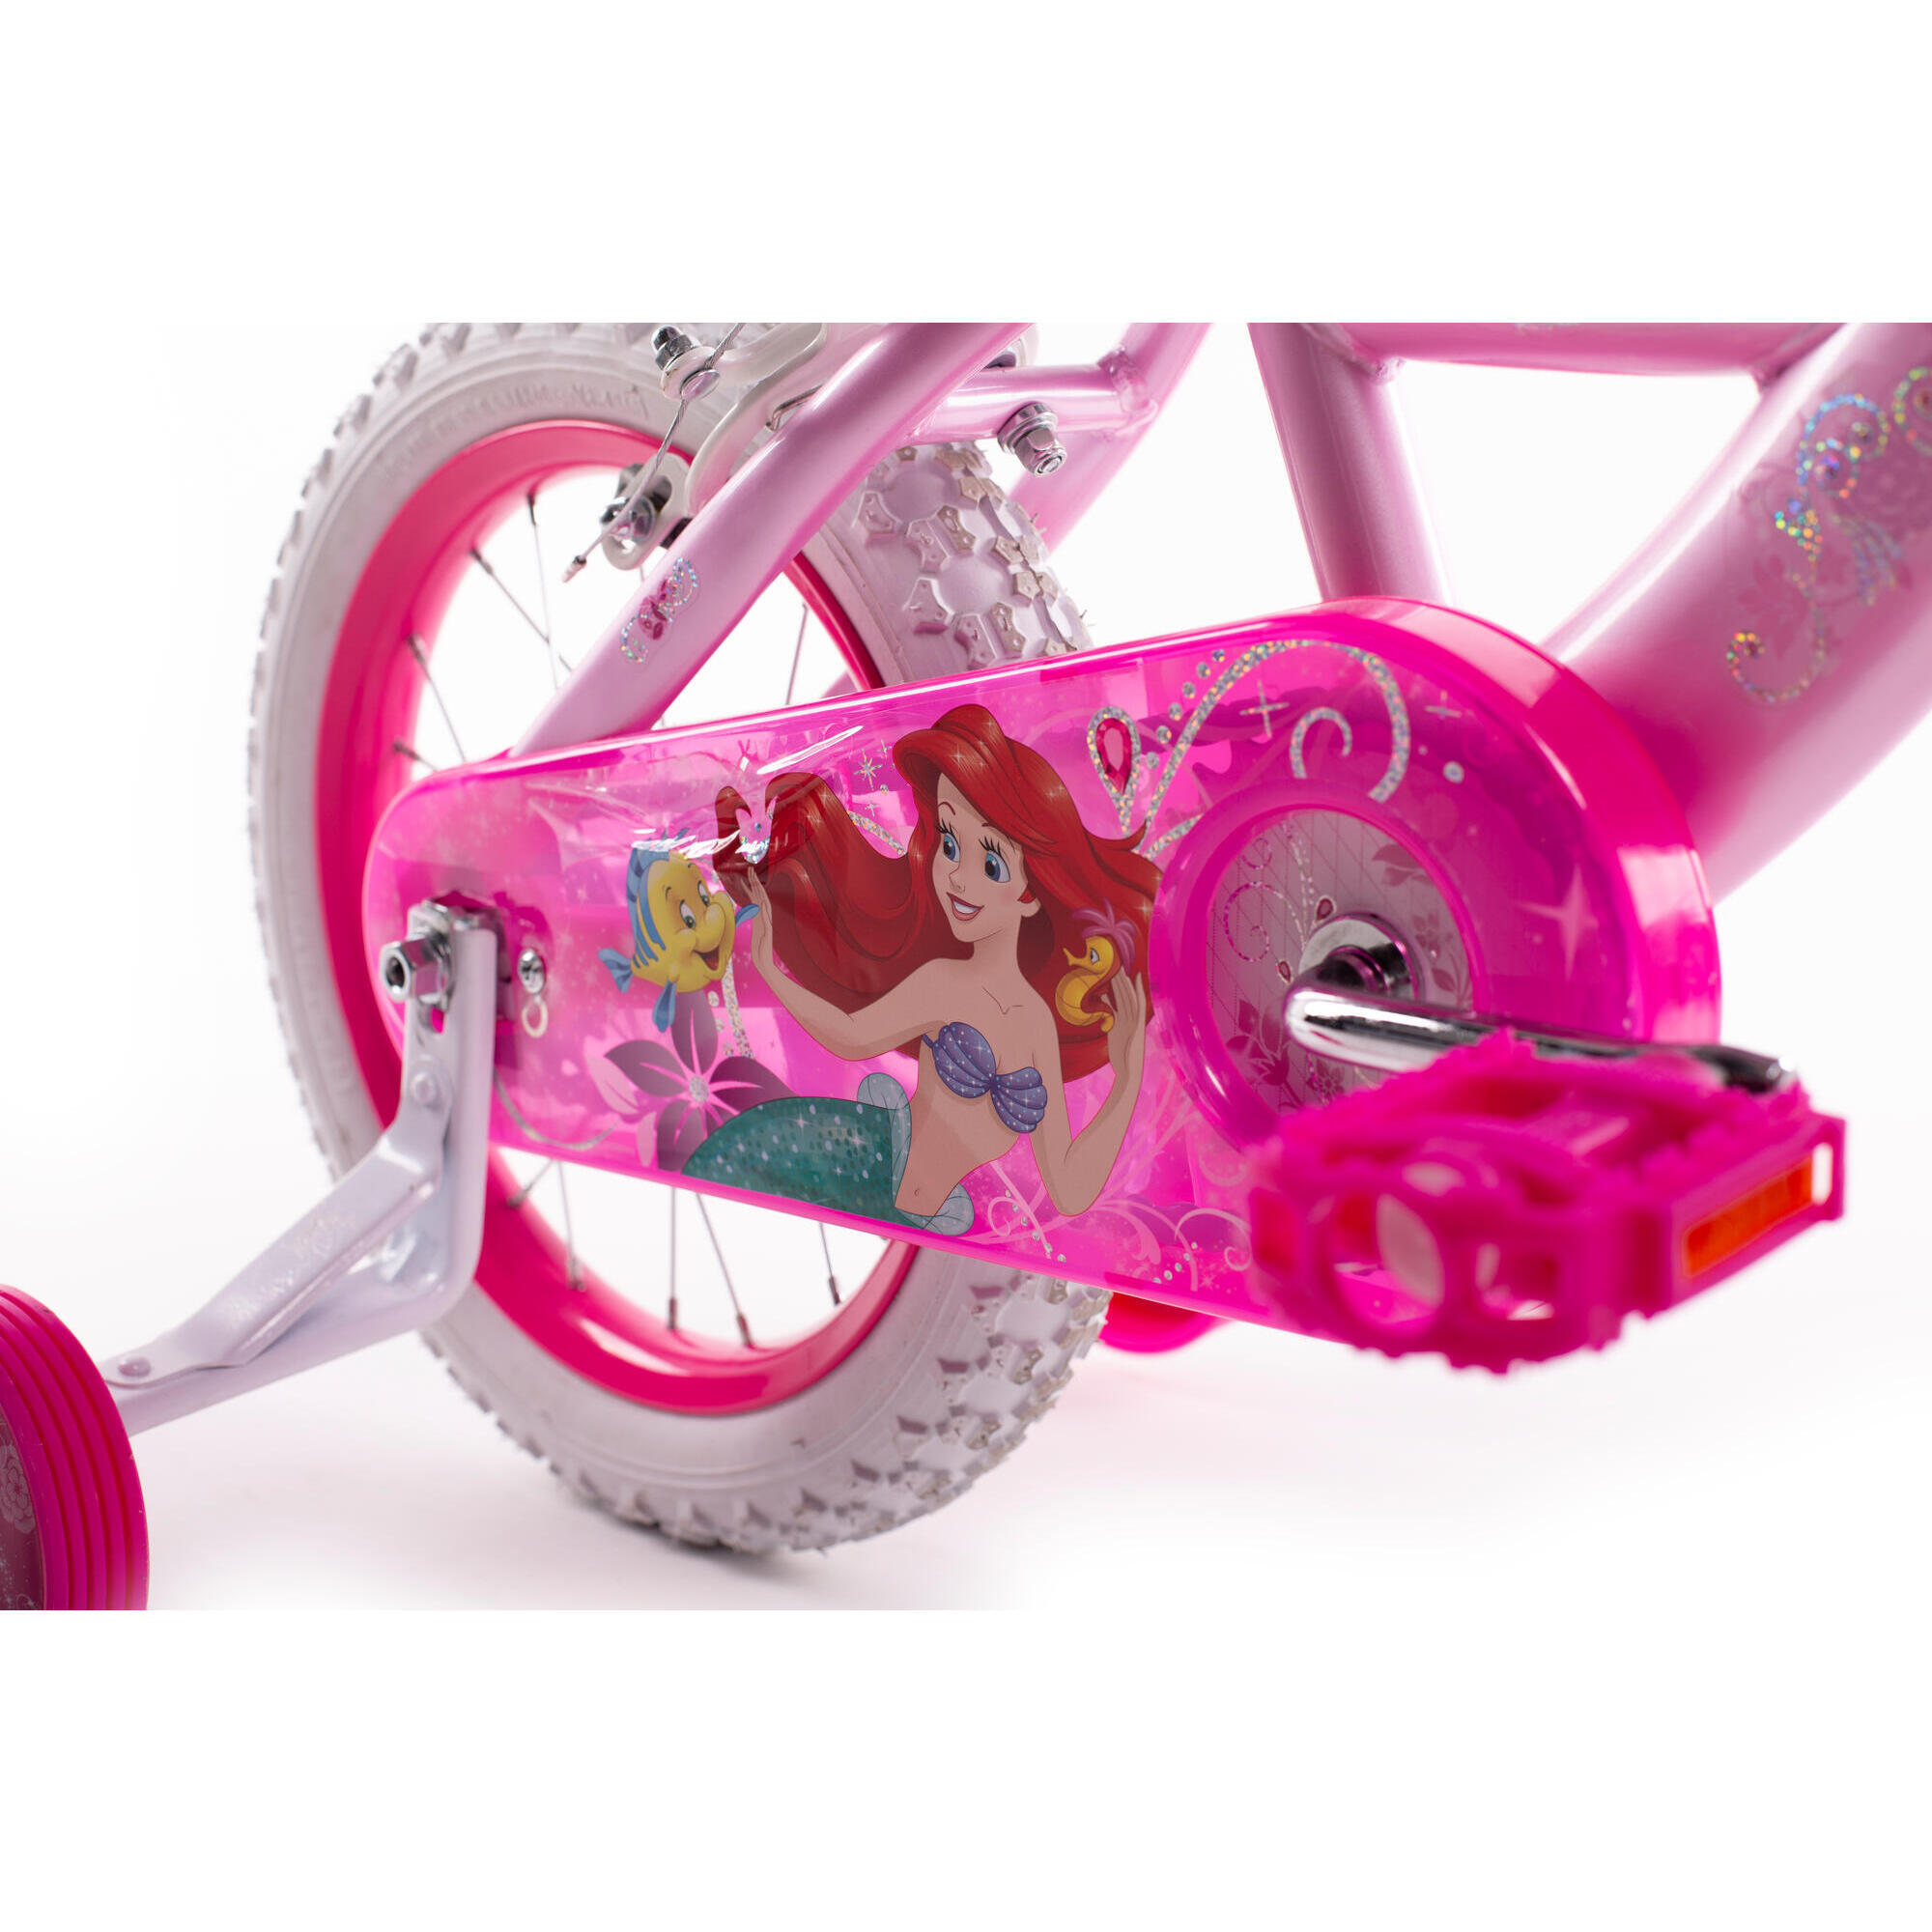 for sale online Huffy Disney Princess Girls Bike 52499 Pink 